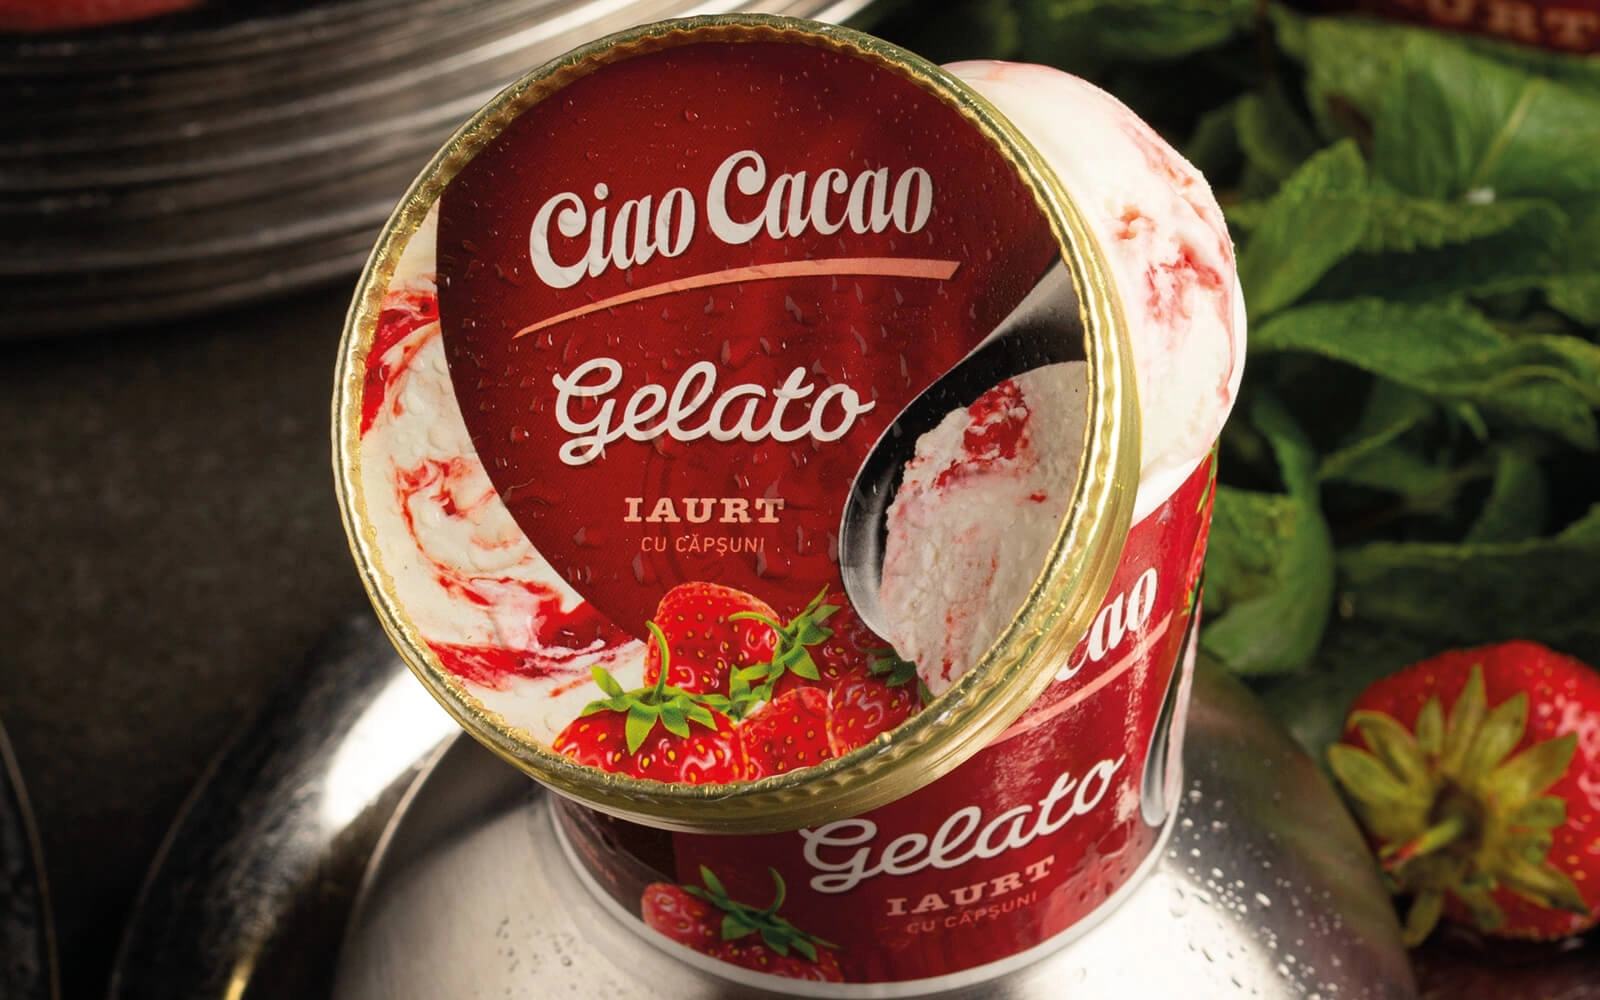  Gelato yoghurt ice cream with strawberries